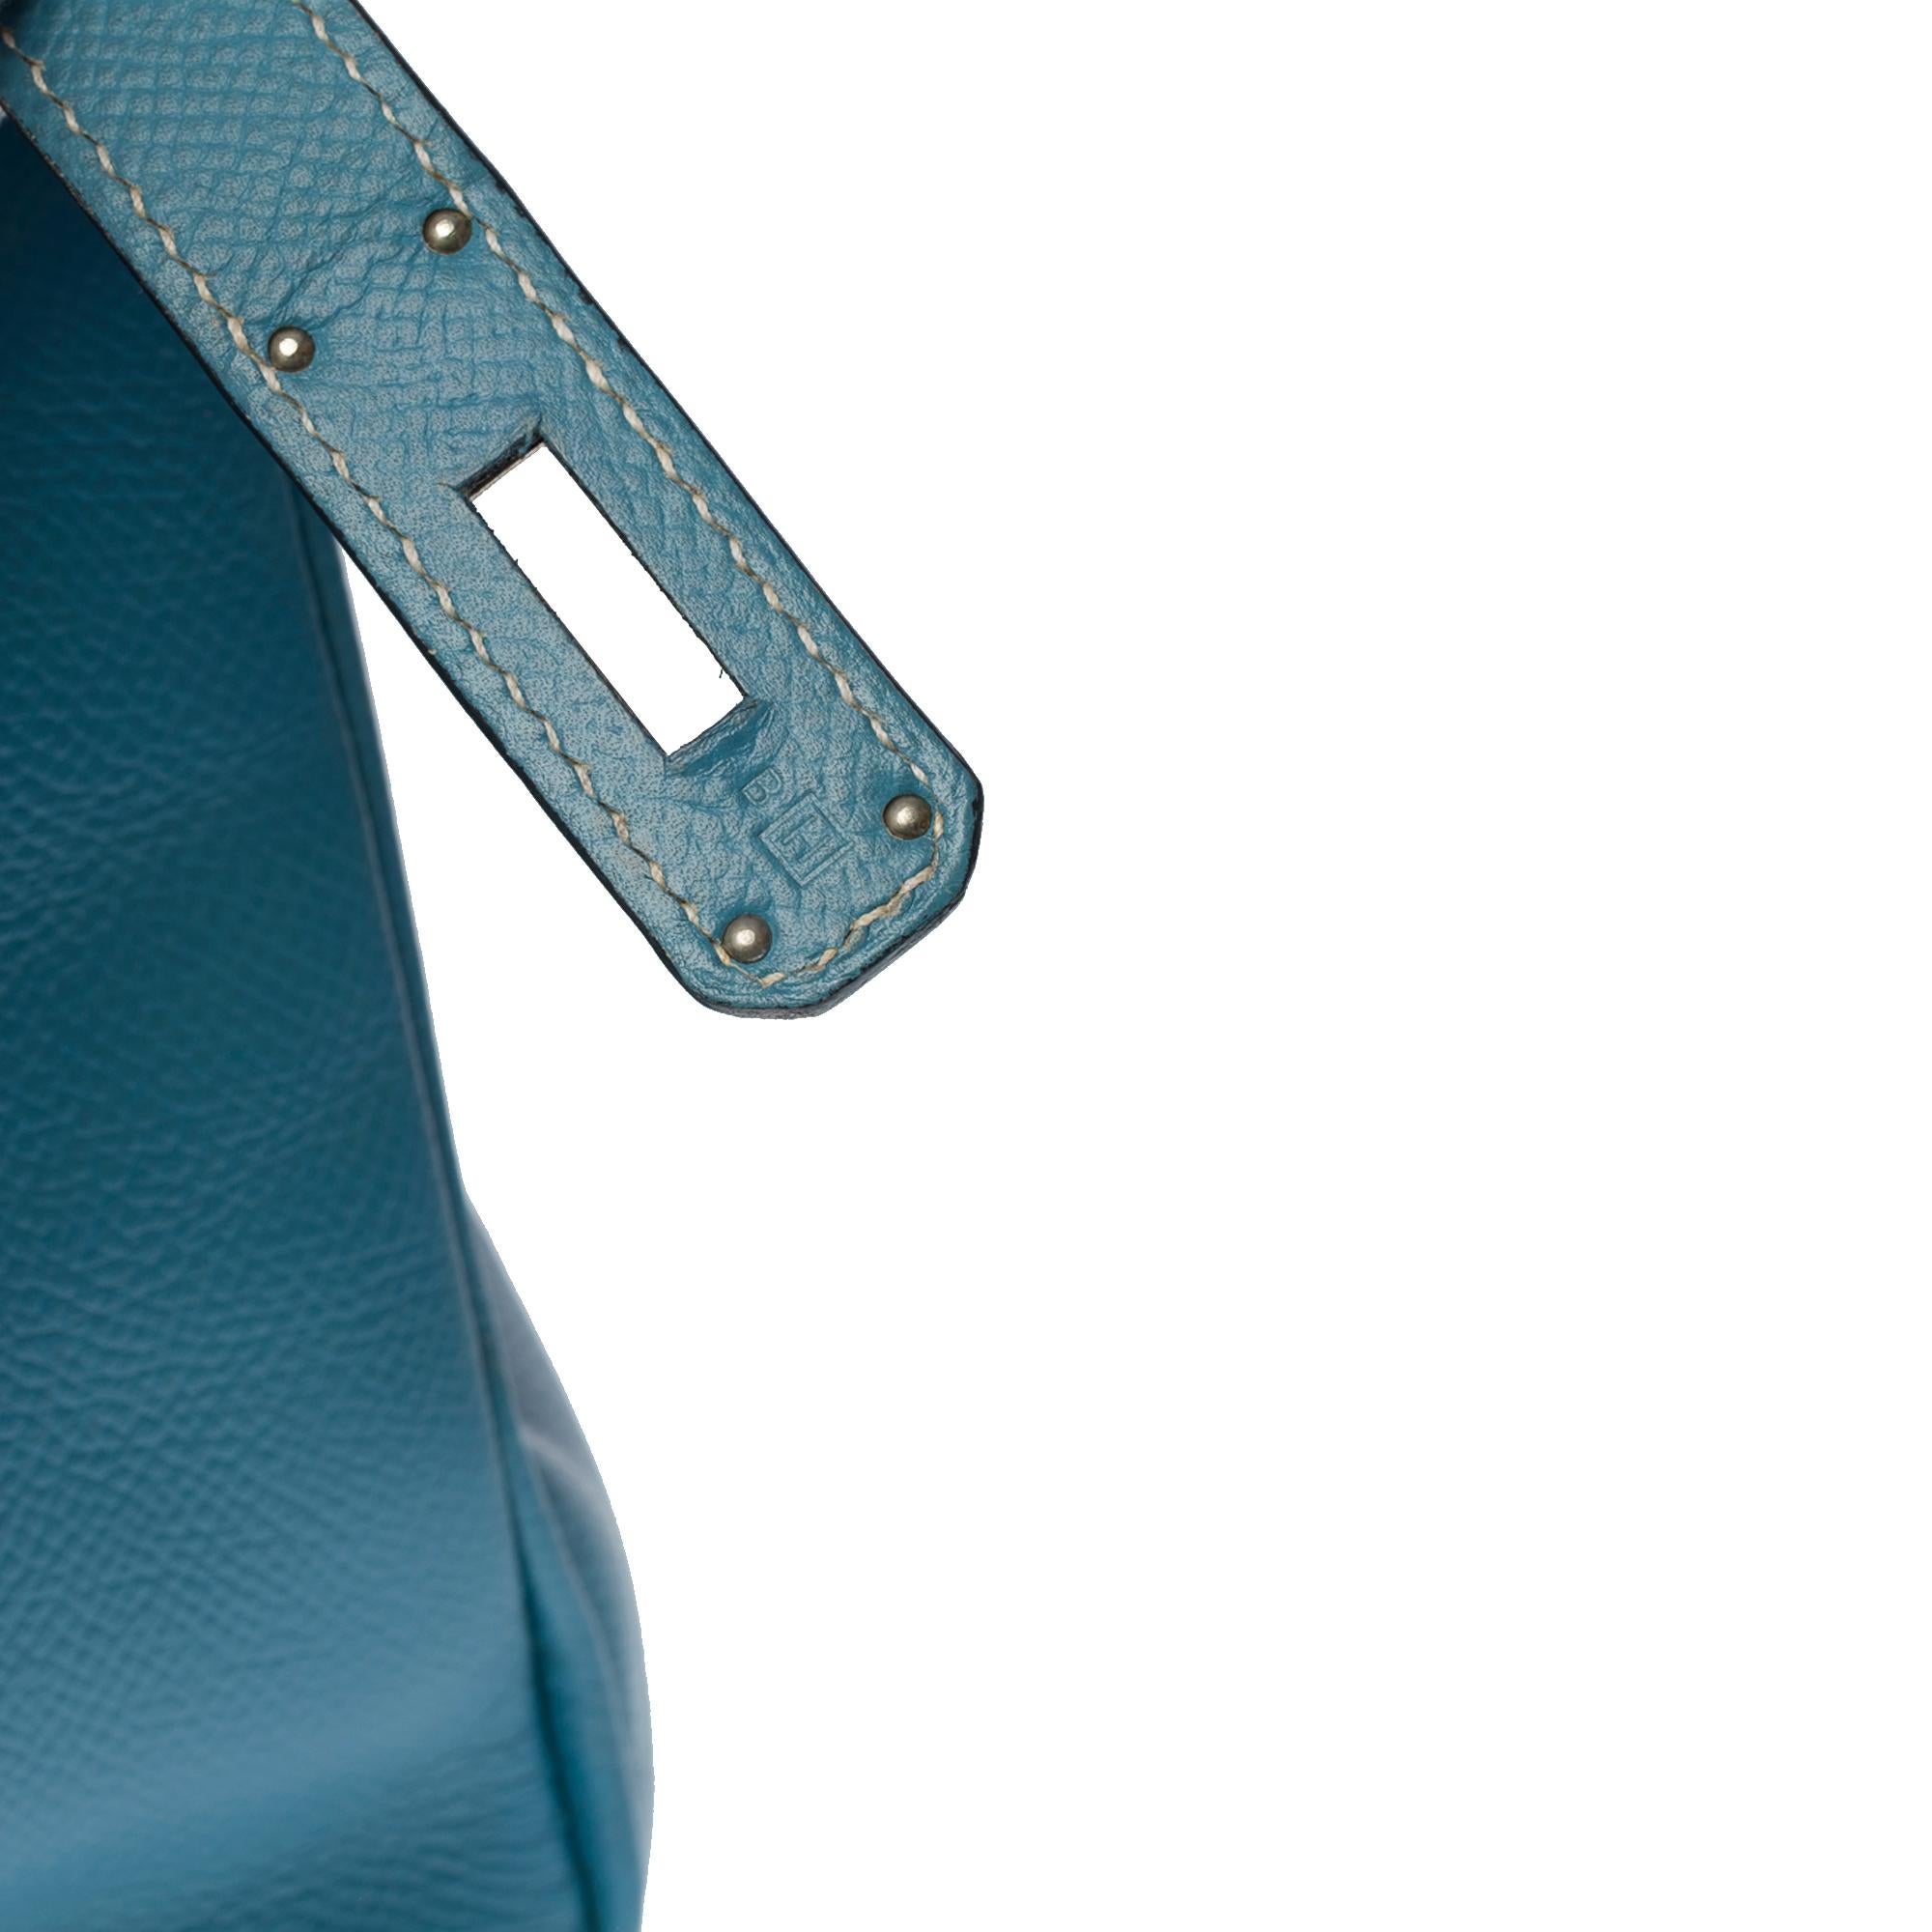 Stunning Hermès Birkin 30 handbag in Blue Jeans Epsom leather, SHW 2